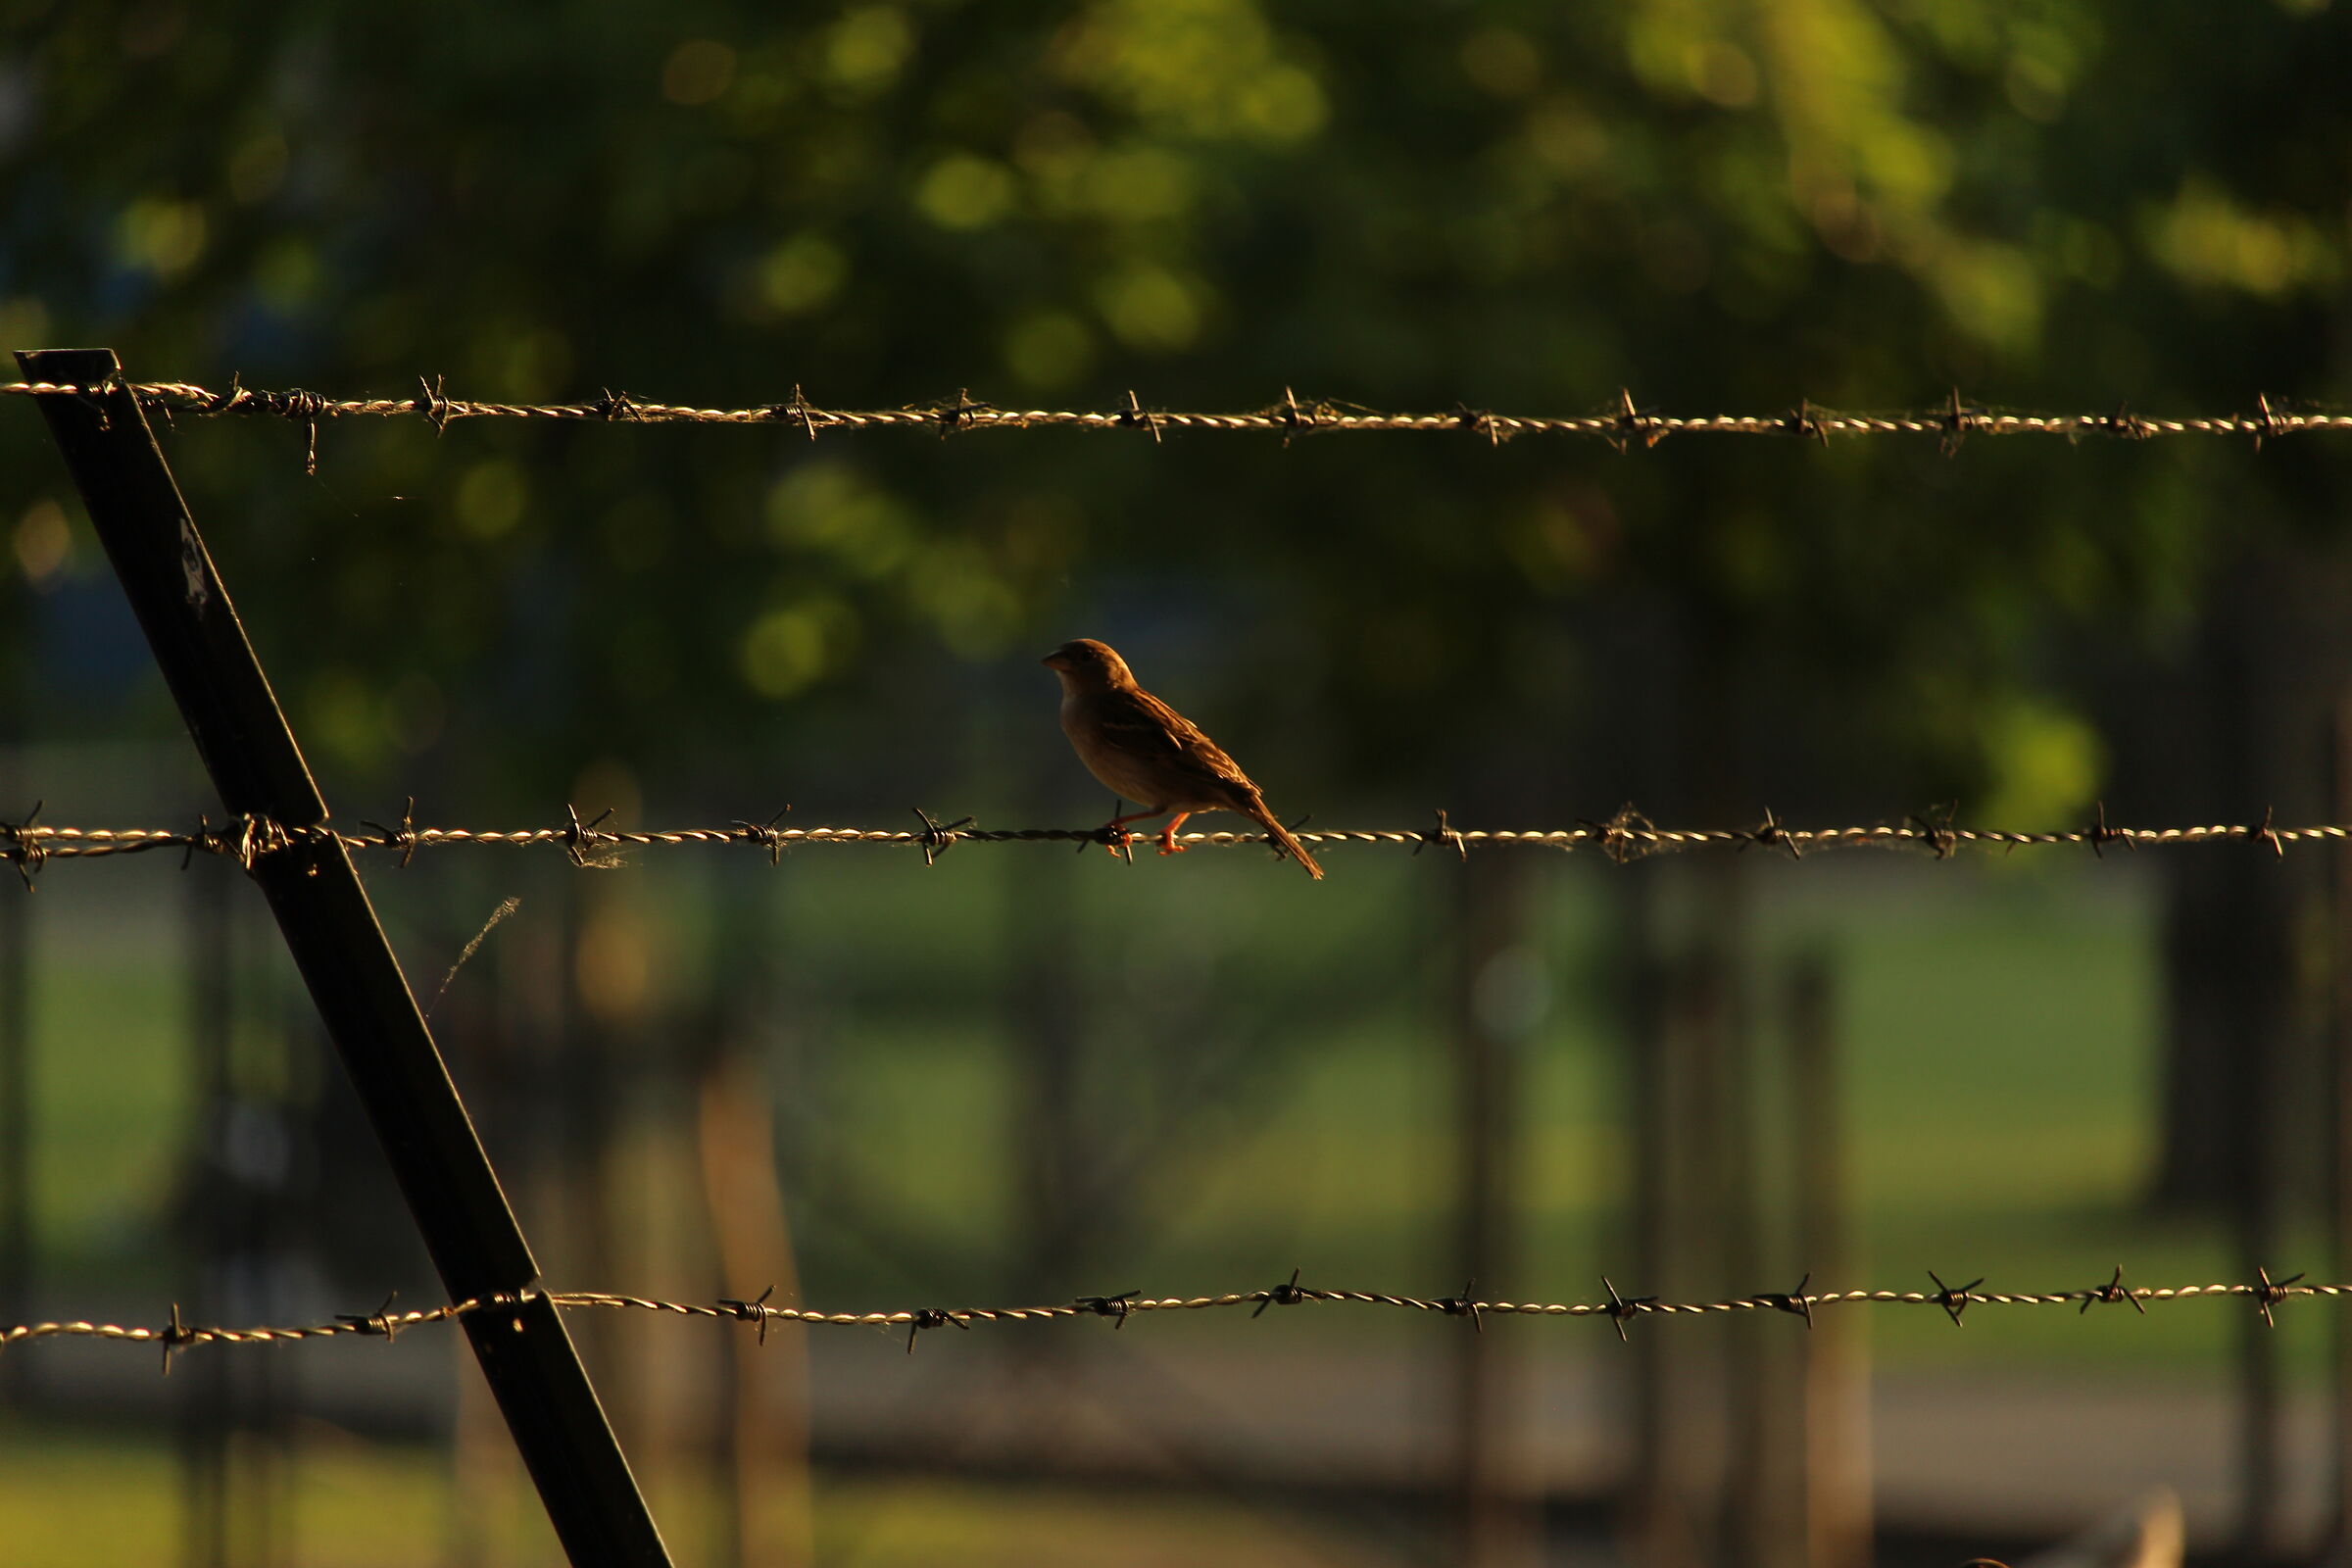 Little bird in Kronenburgerpark, Nijmegen...